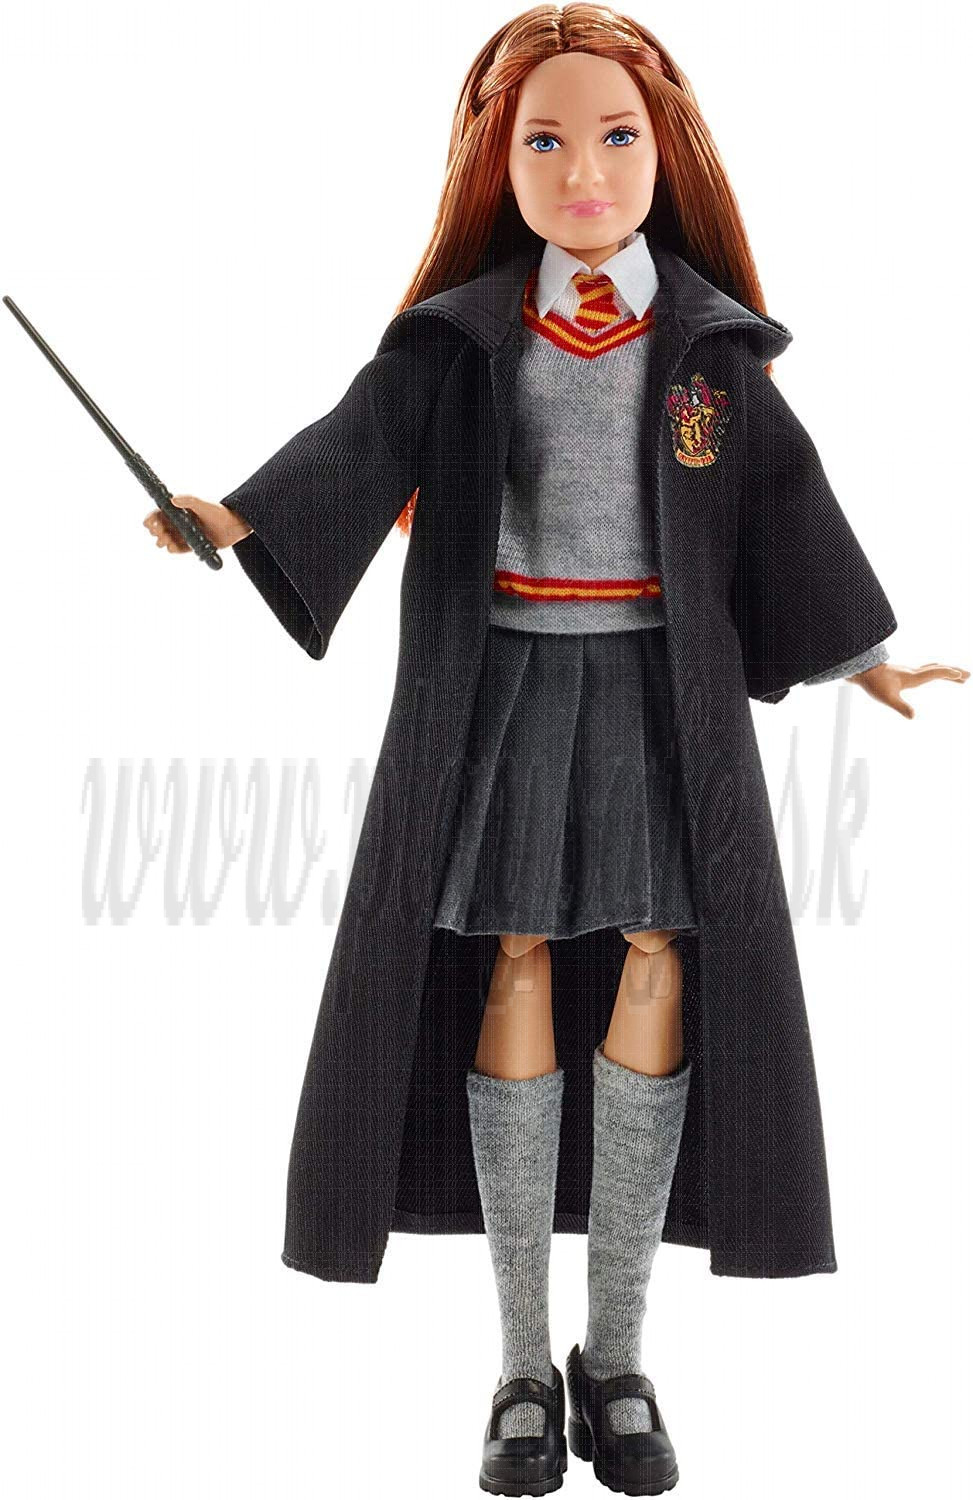 Mattel Harry Potter Ginny Weasley Doll, 27cm